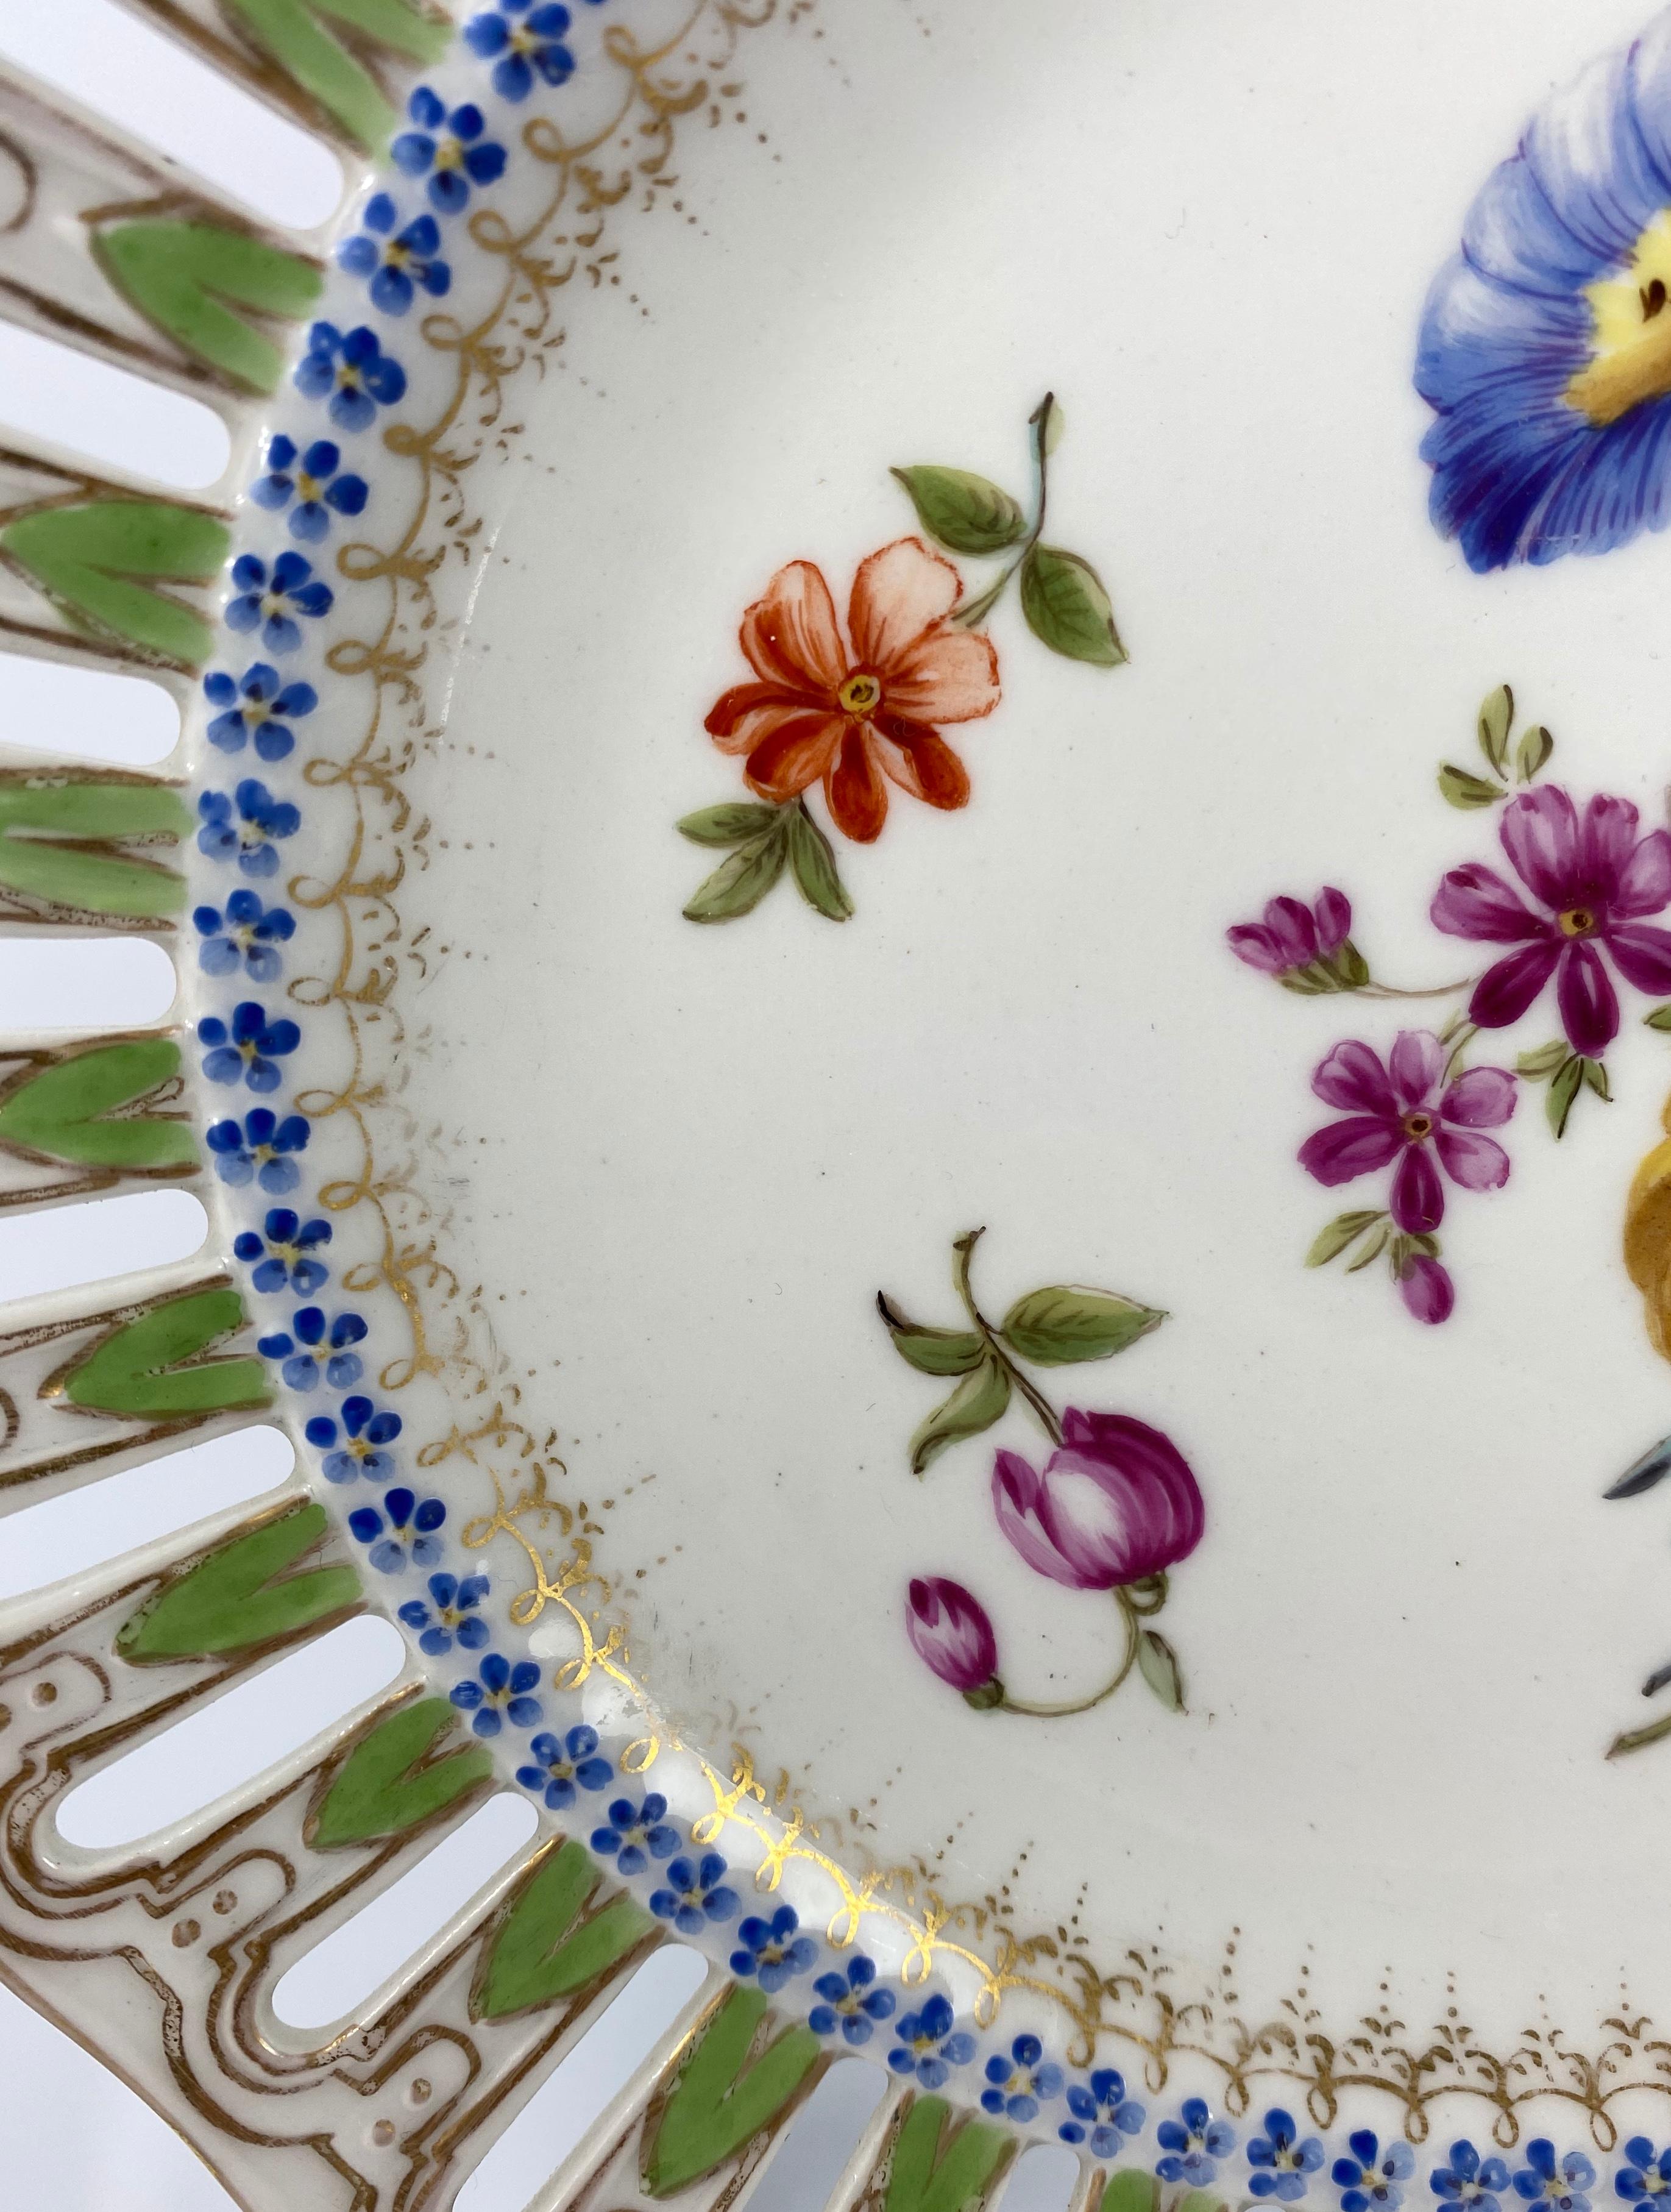 German Meissen Porcelain Reticulated Plate, circa 1860